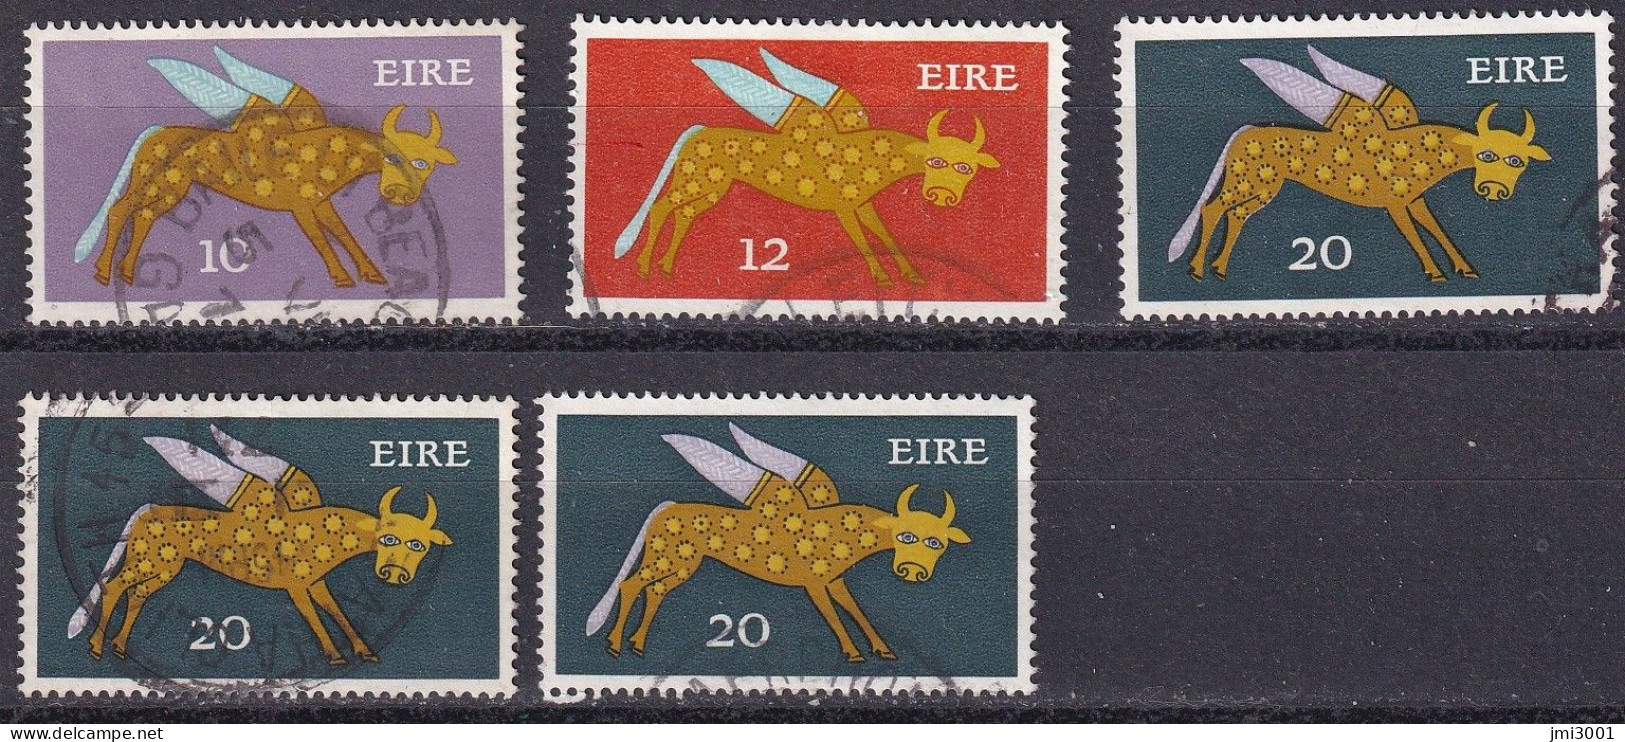 Irlande 1971/74  Lot °  Avec Filigrane E    2 Scans - Used Stamps